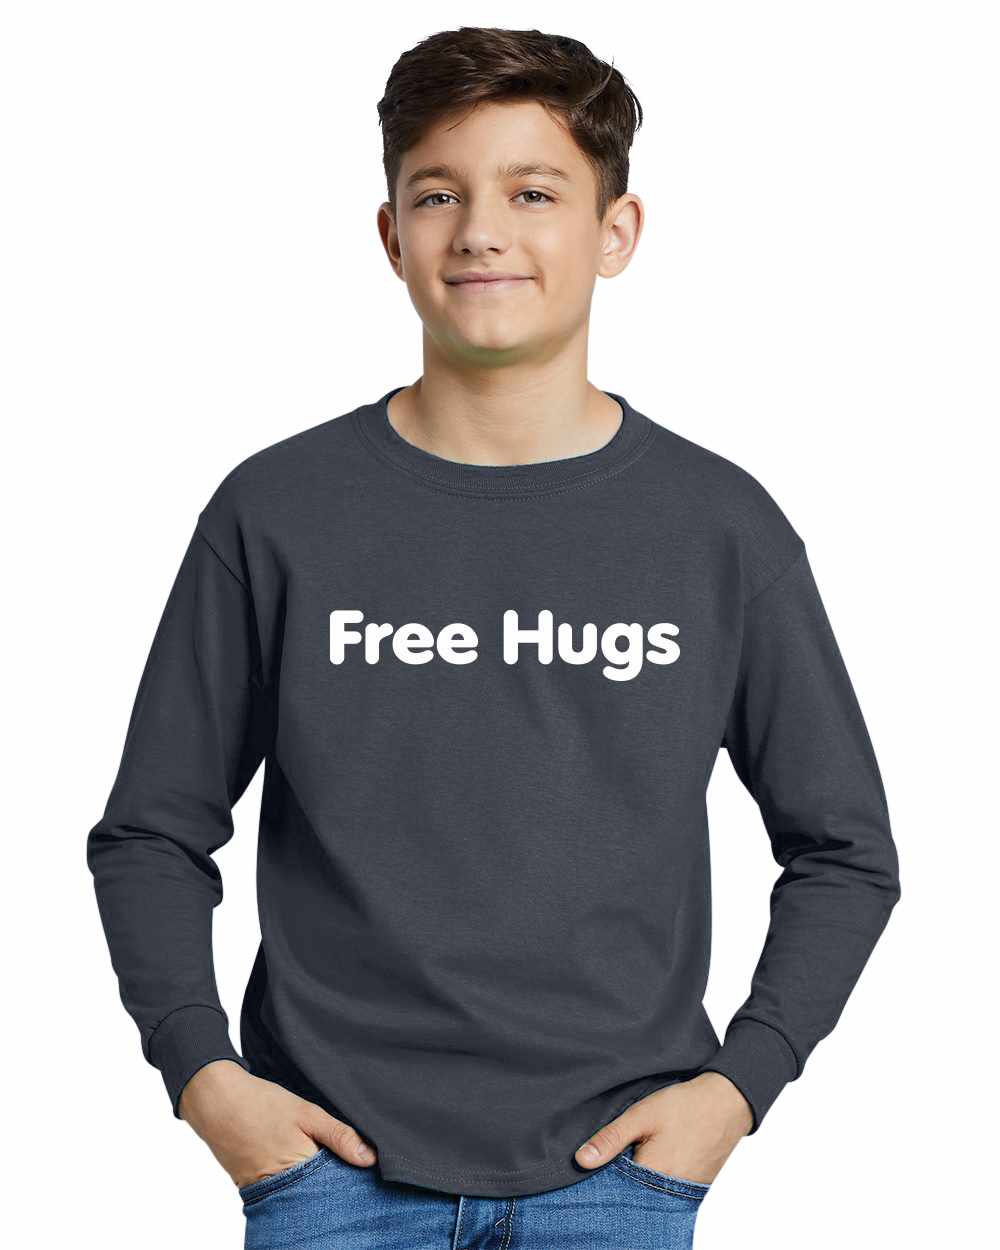 Free Hugs on Youth Long Sleeve Shirt